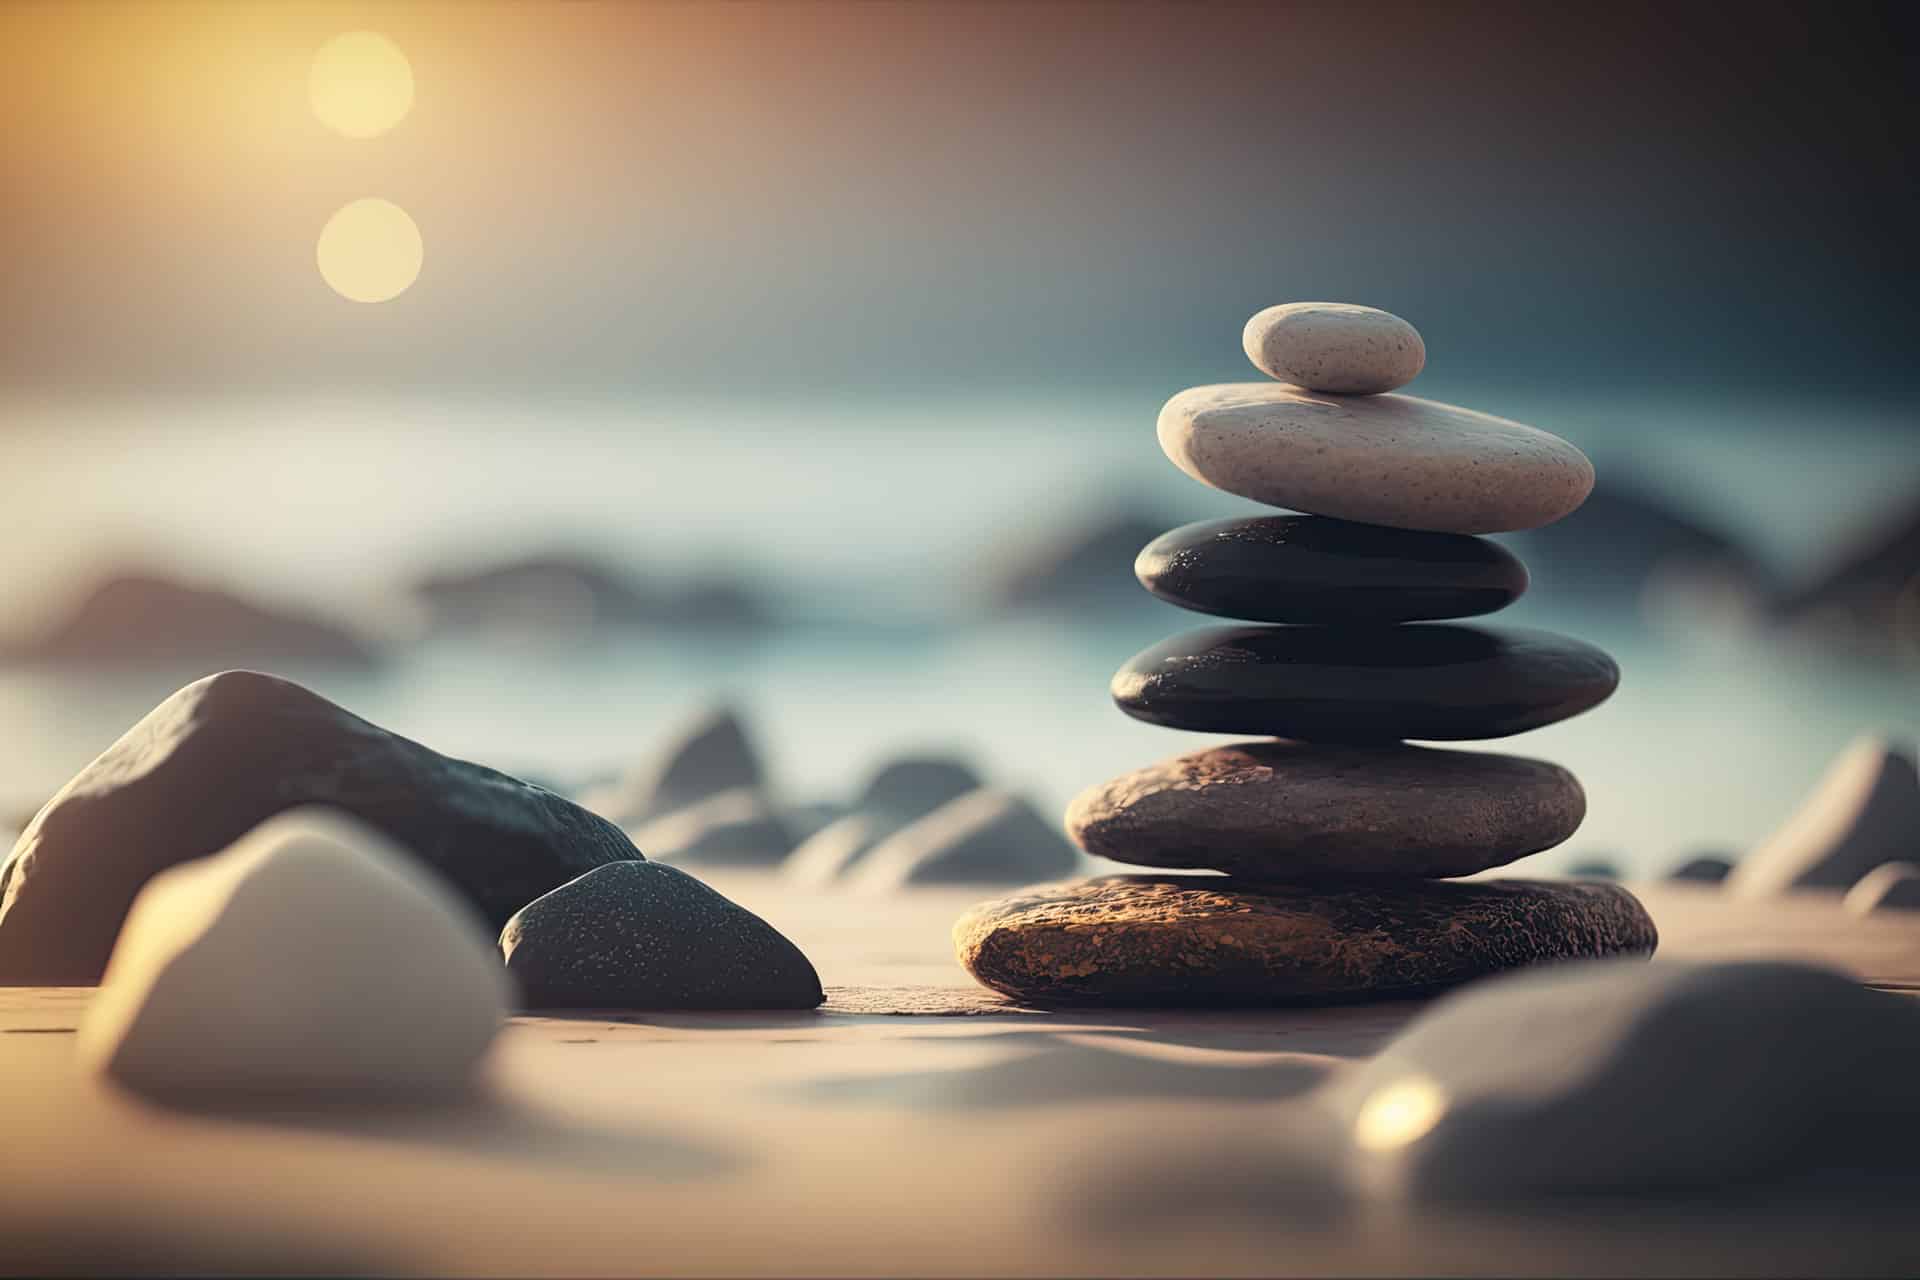 zen stones balanced on the beach. Sunrise light. Meditation and relaxation